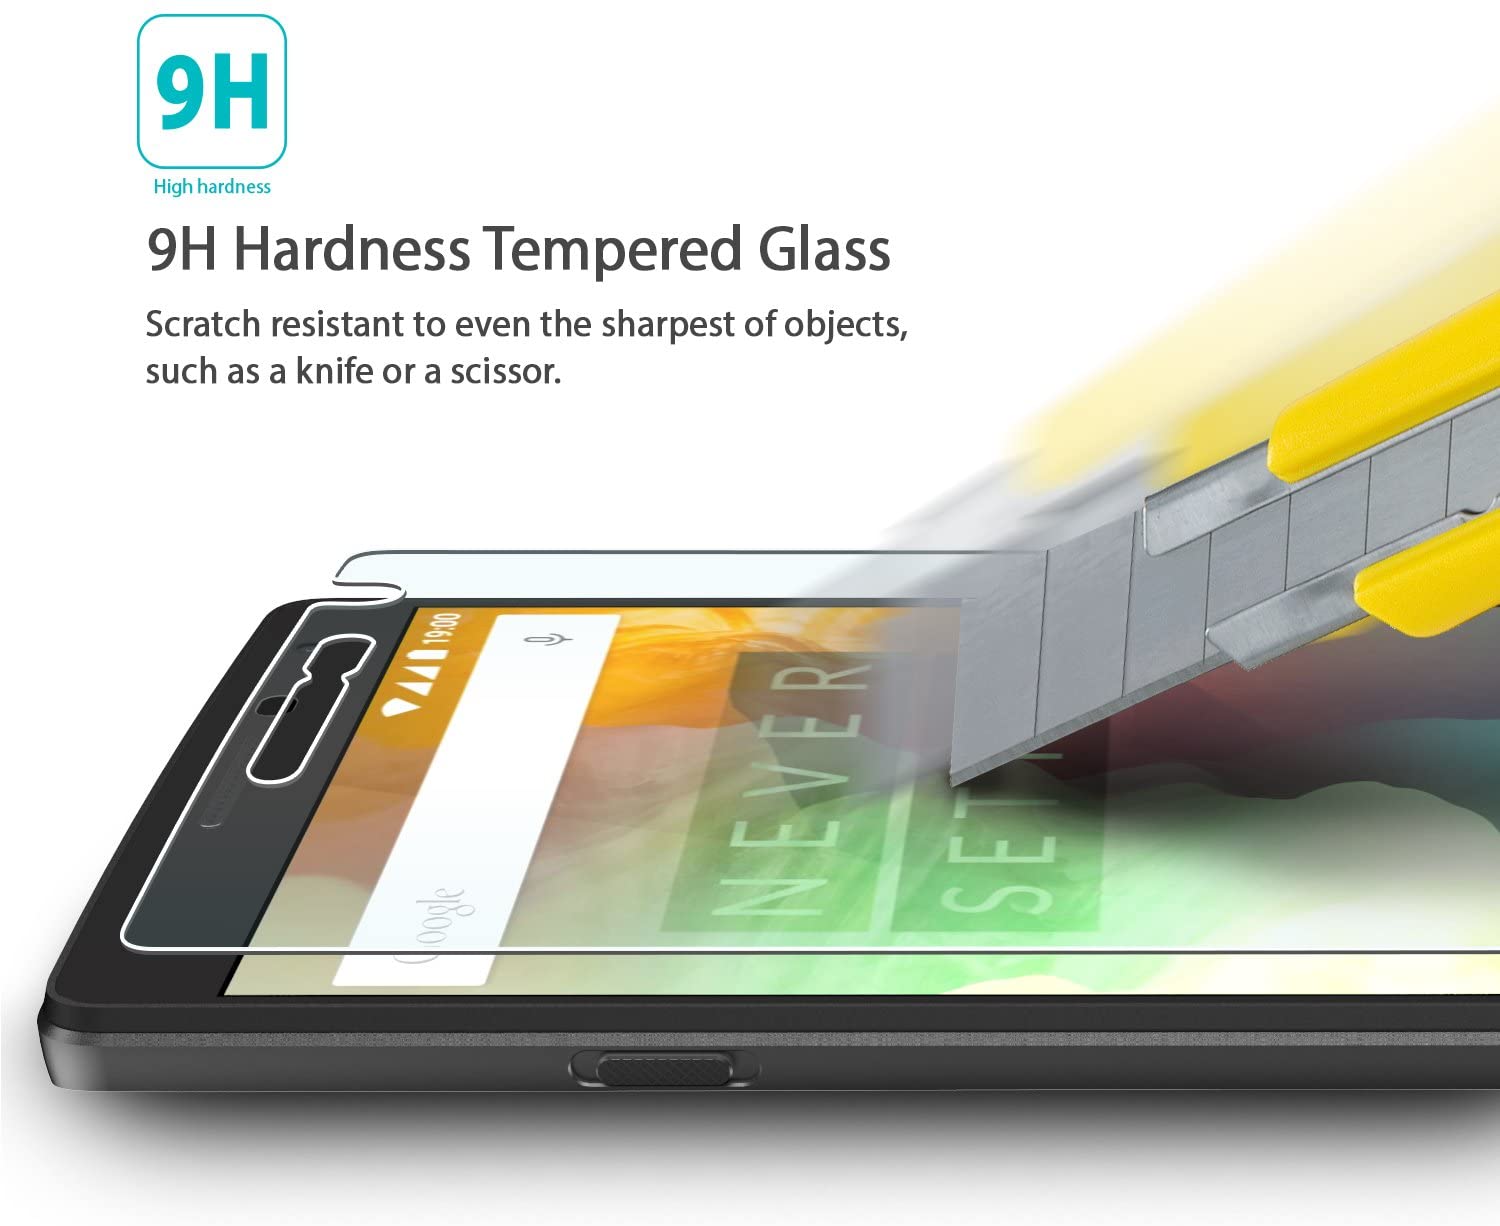 9h hardness tempered glass